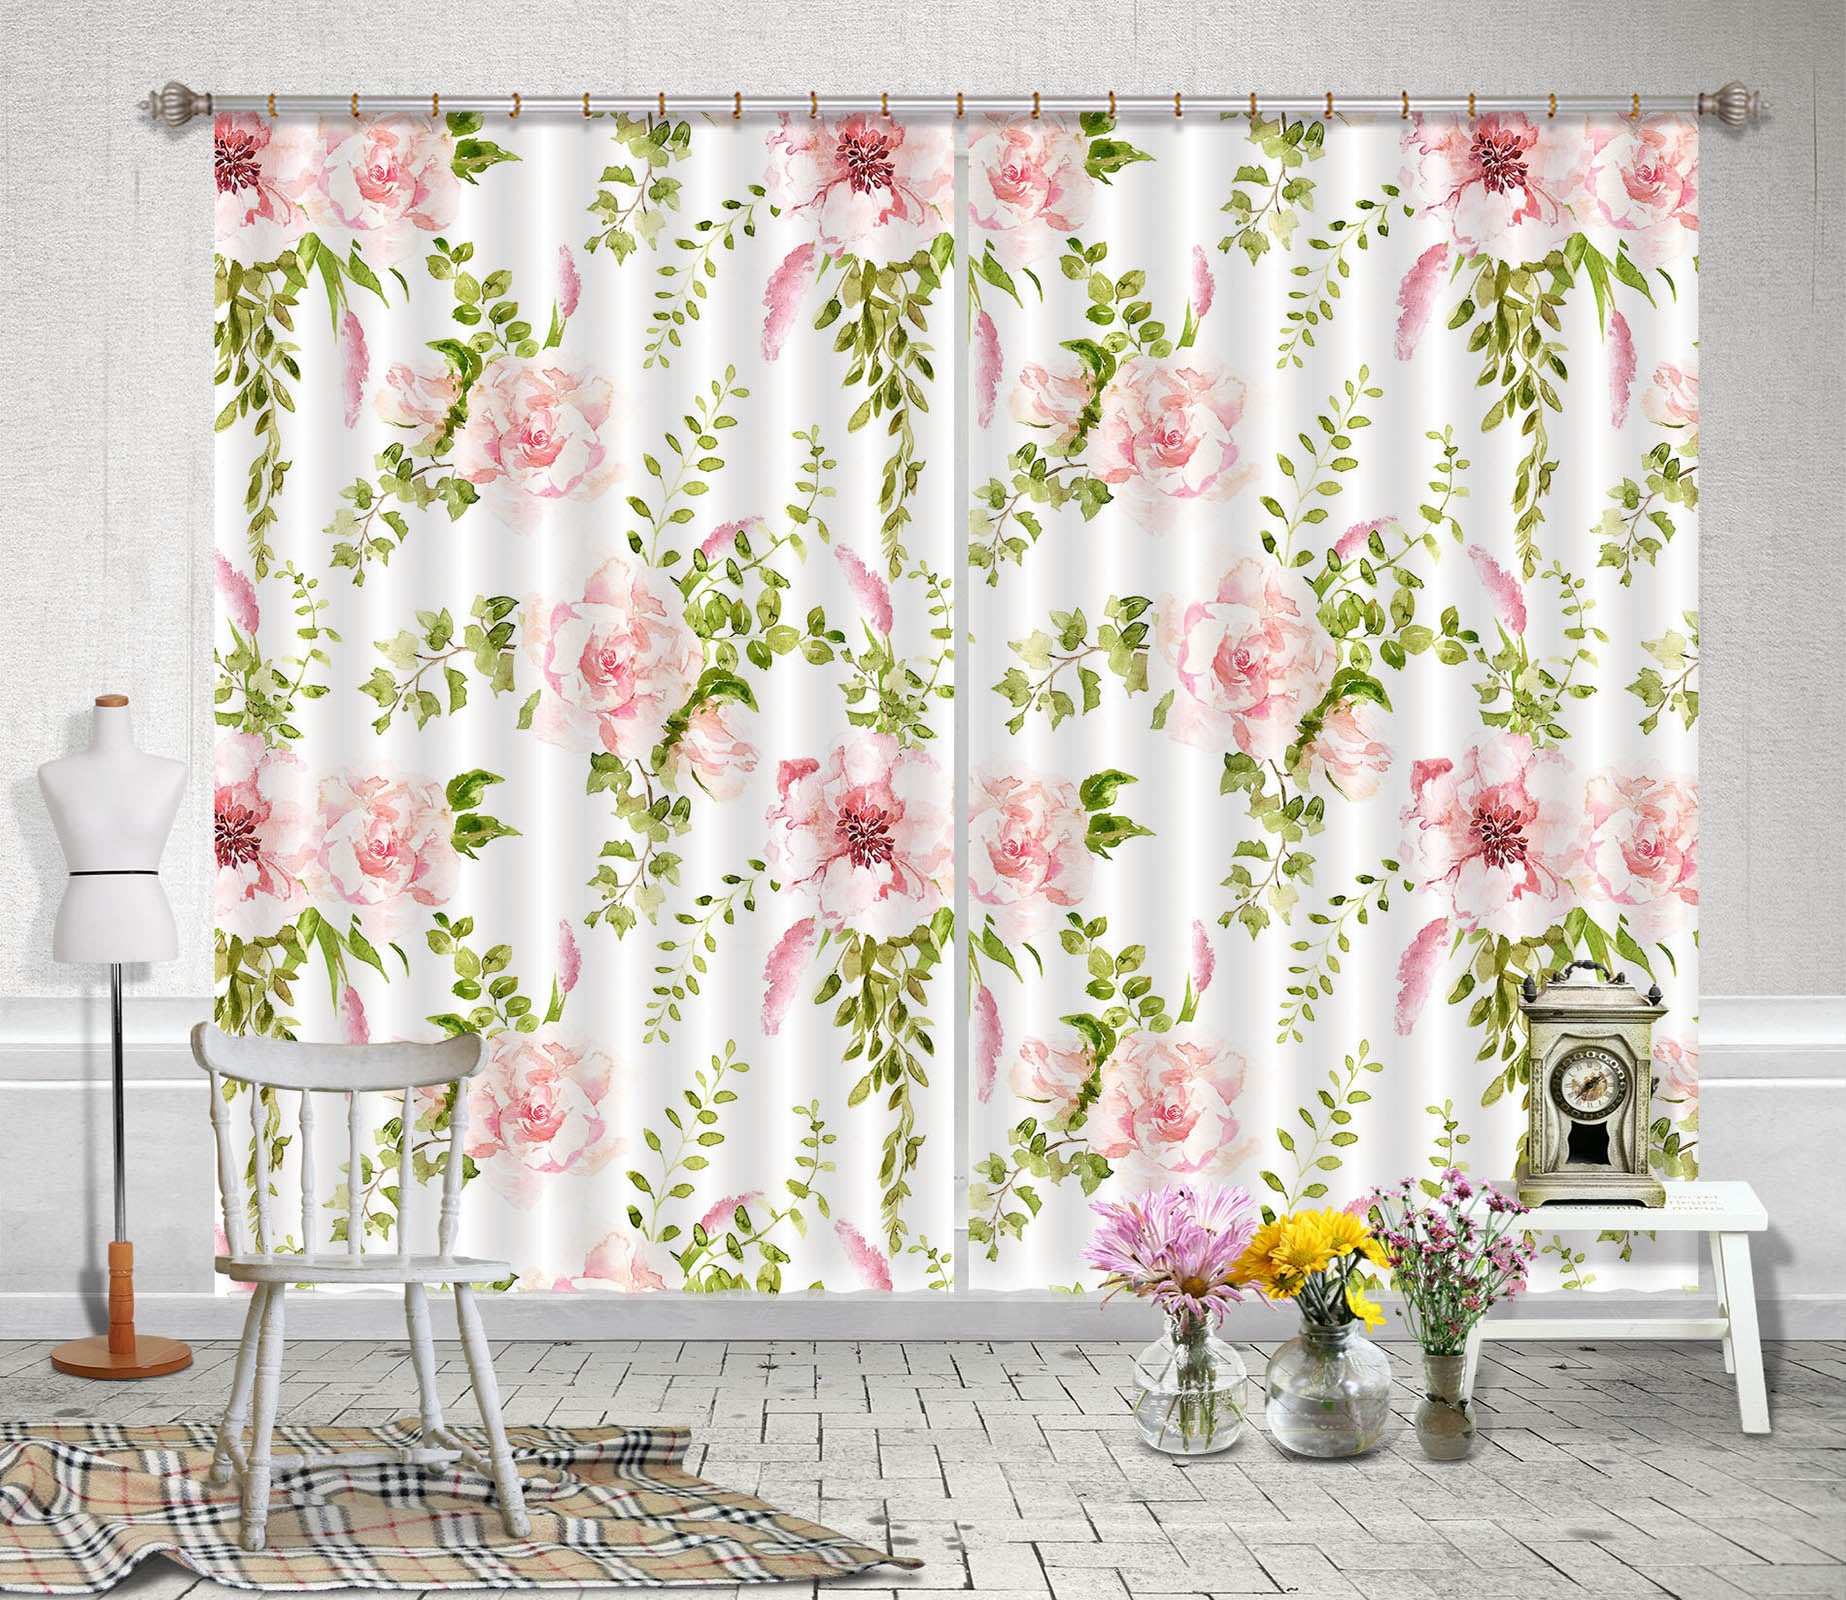 3D Flower Vine 225 Uta Naumann Curtain Curtains Drapes